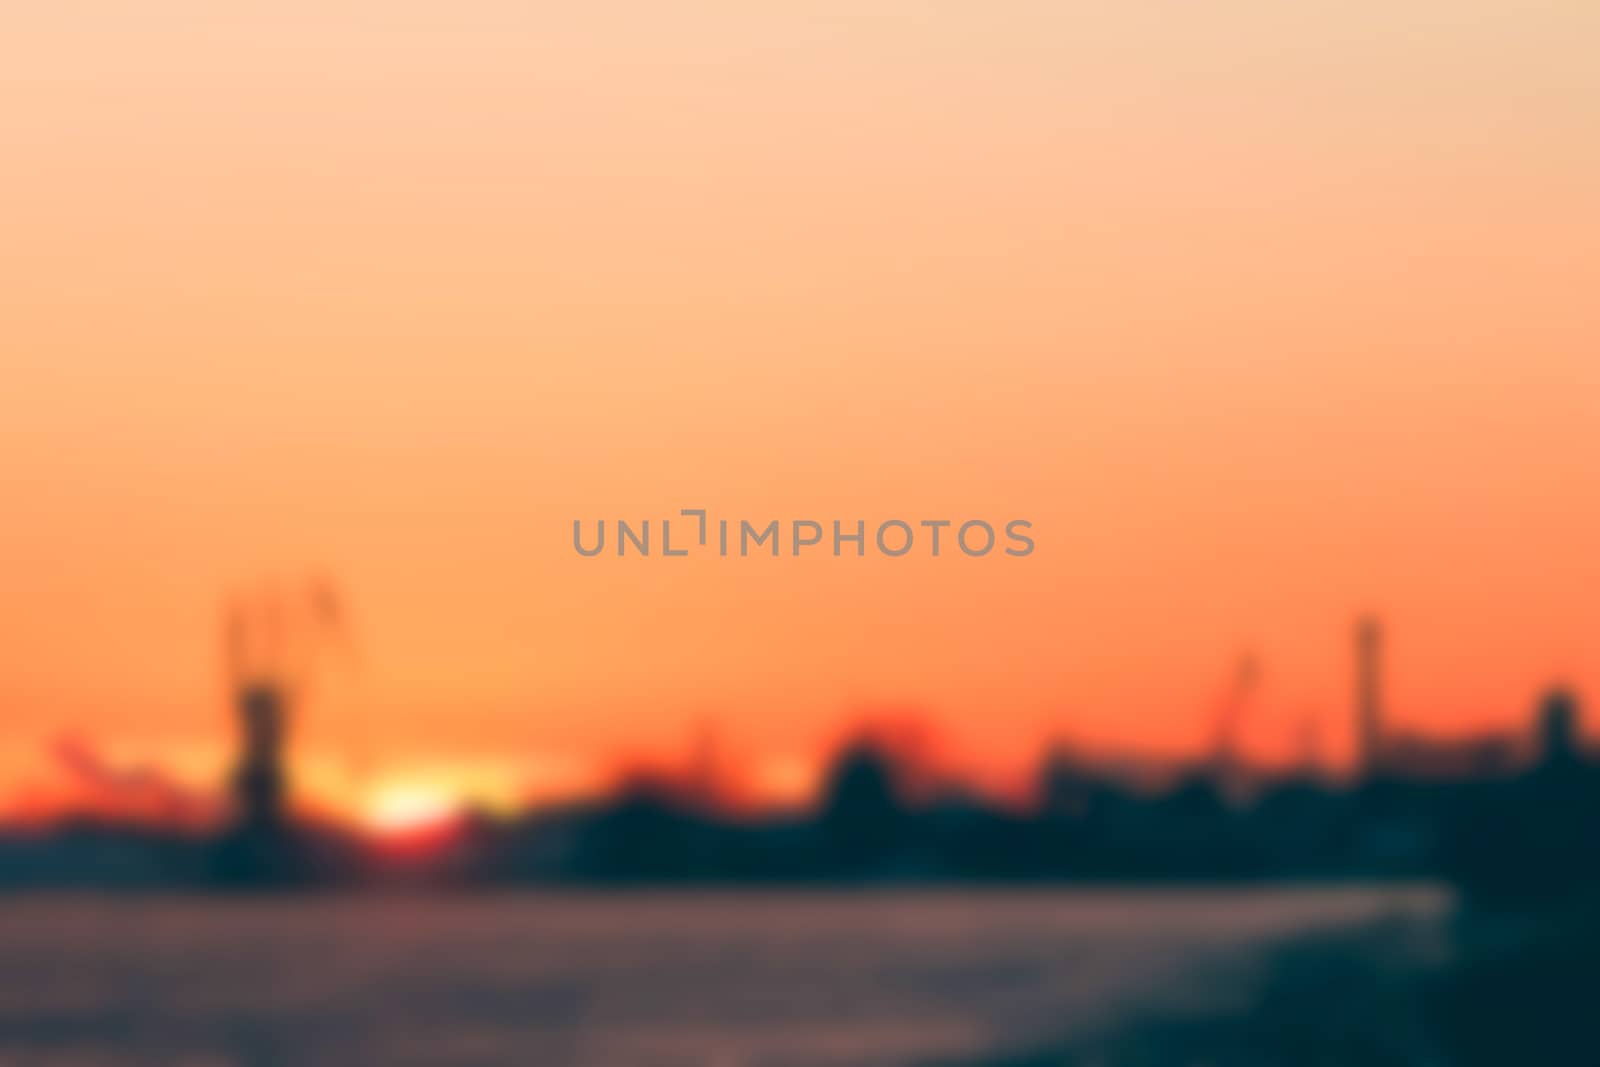 Gold sunset - blurred image by sengnsp